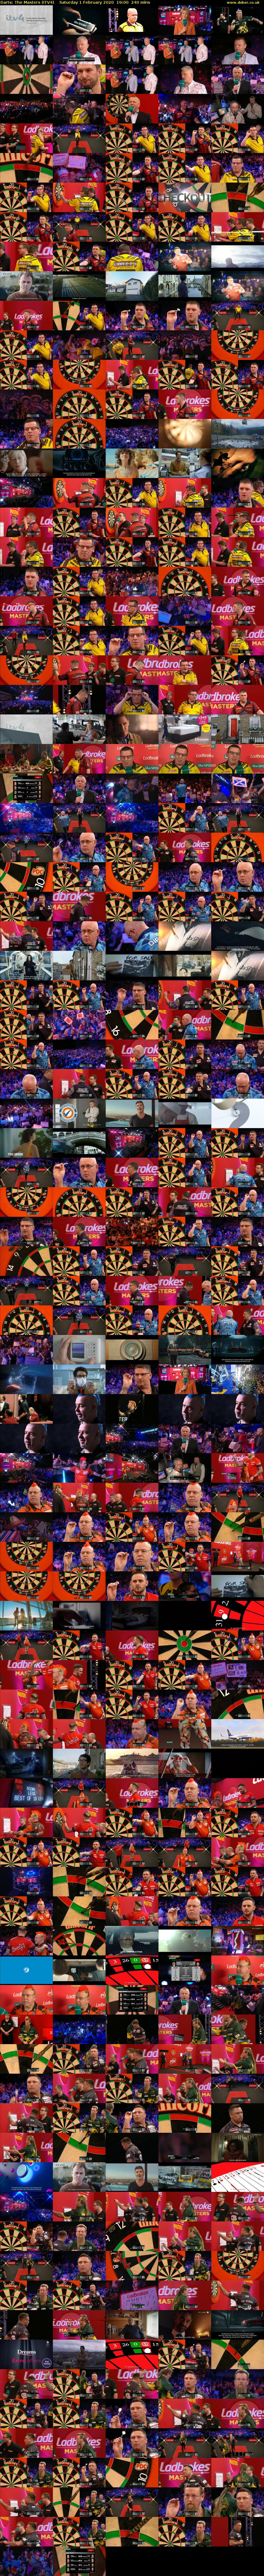 Darts: The Masters (ITV4) Saturday 1 February 2020 19:00 - 23:00